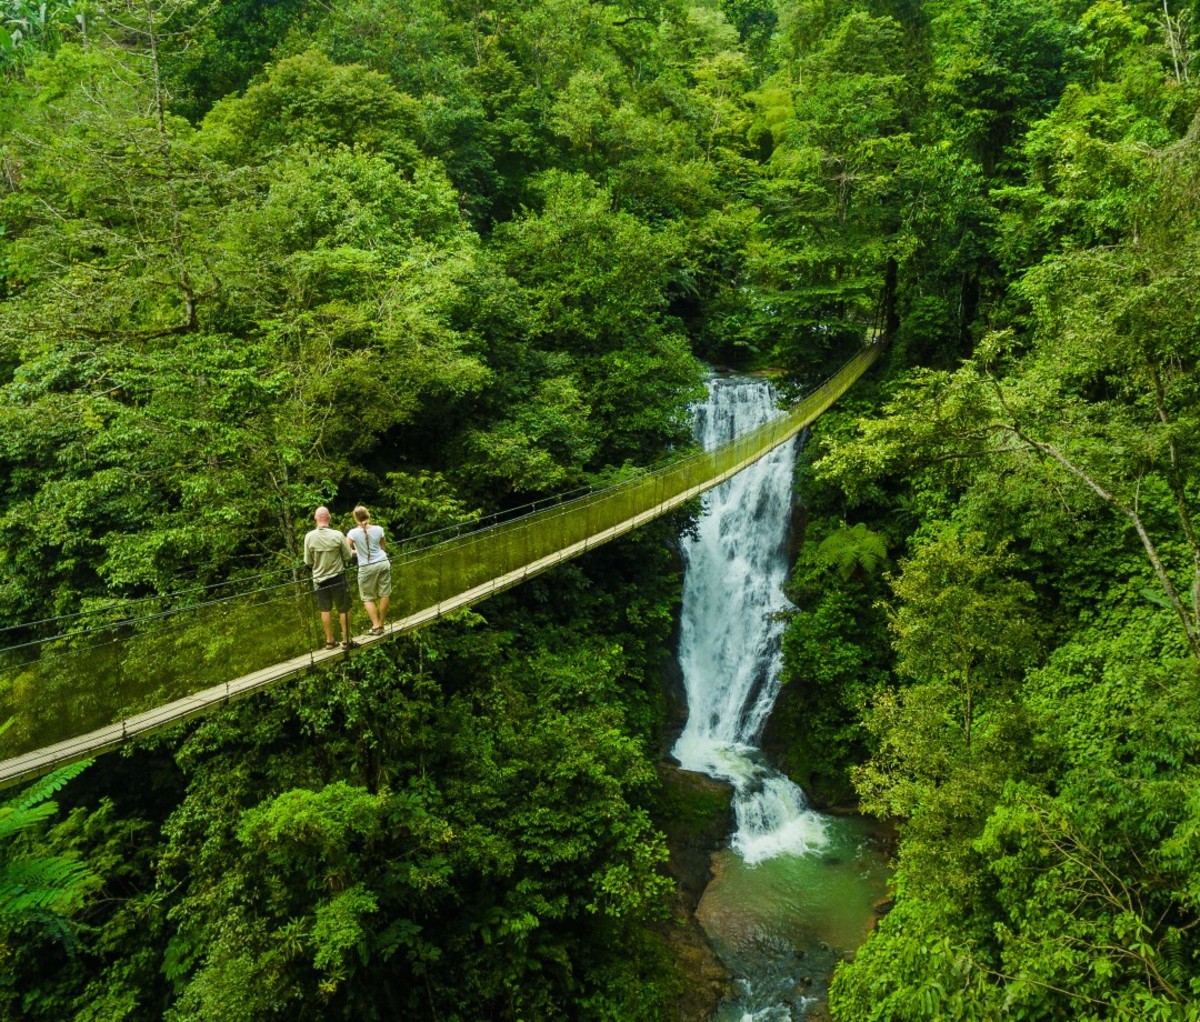 Couple on bridge looking at waterfall in jungle